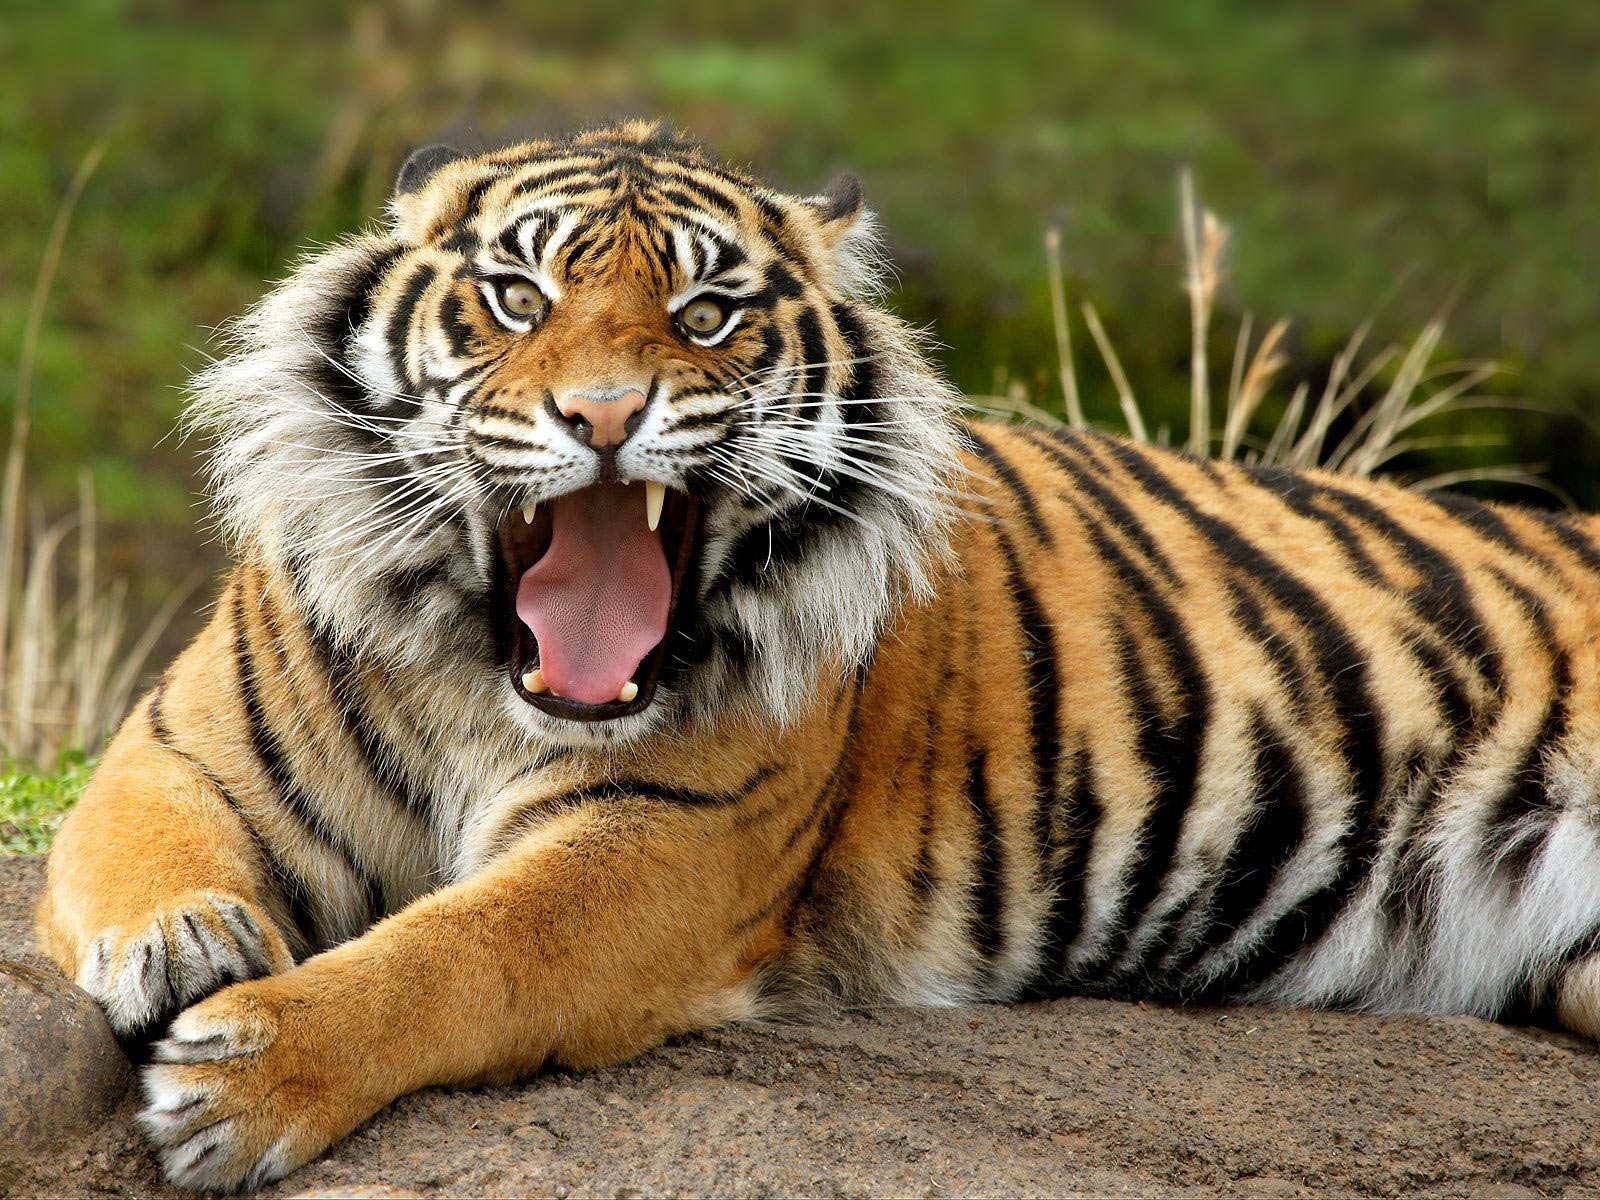 EndangeredSpeciesBiomesProjects - The Bengal Tiger